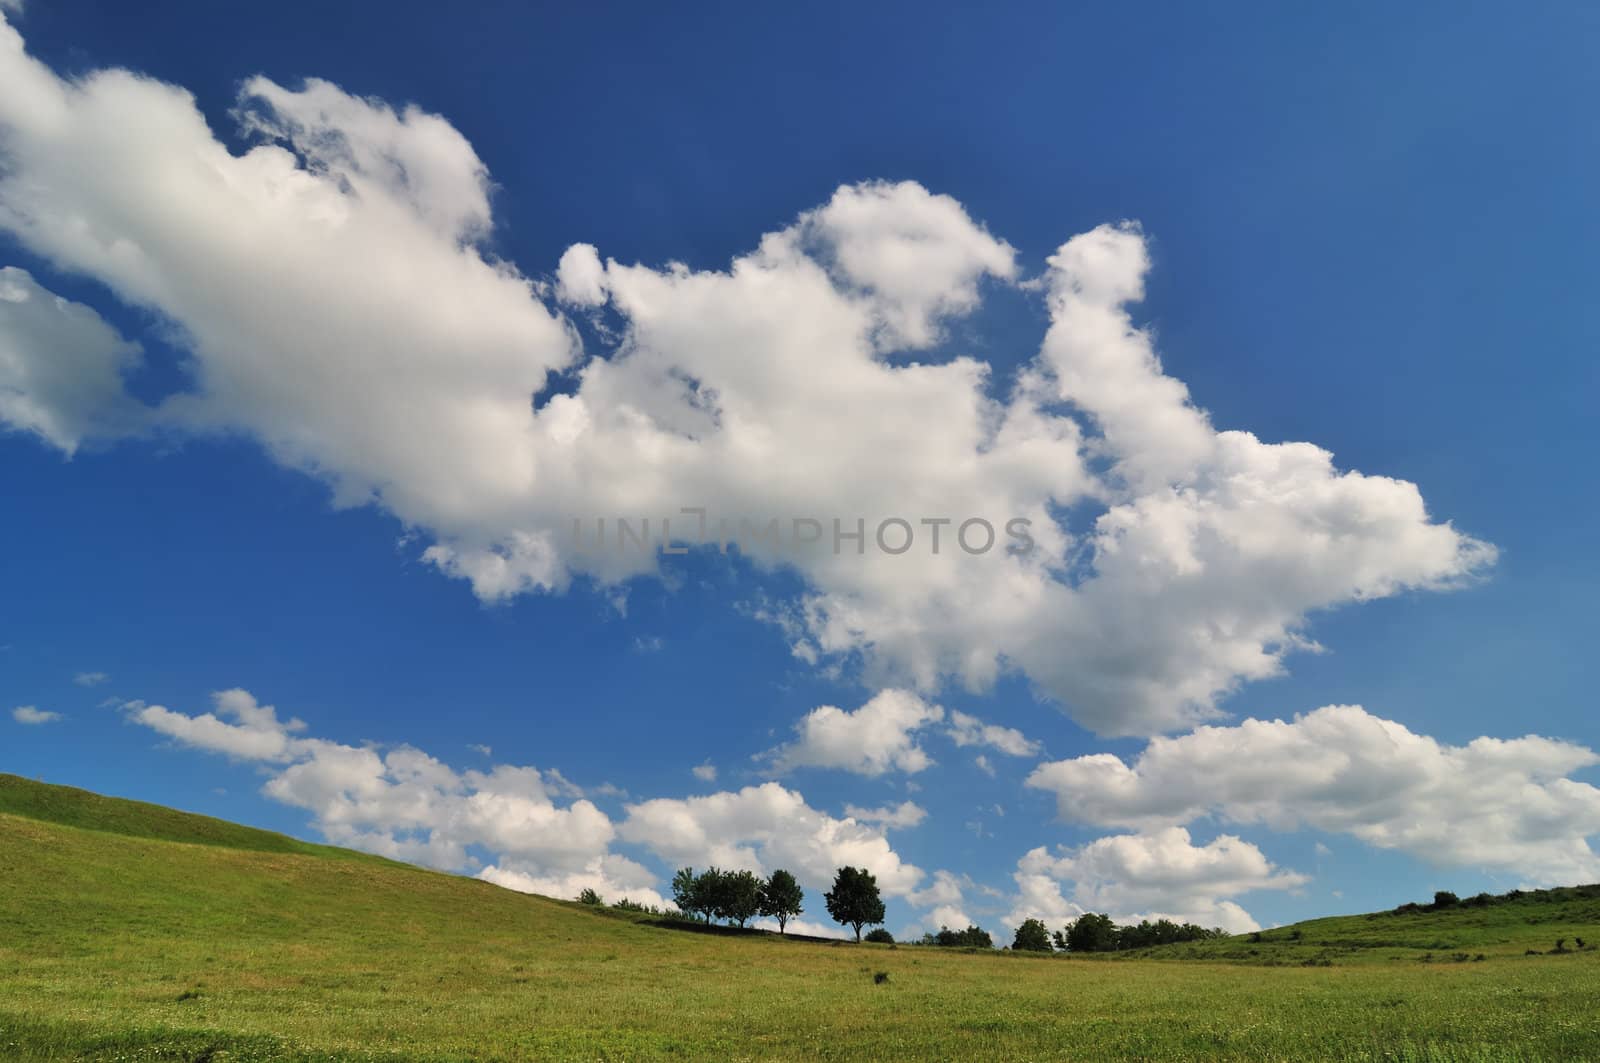 Field and sky by zagart36